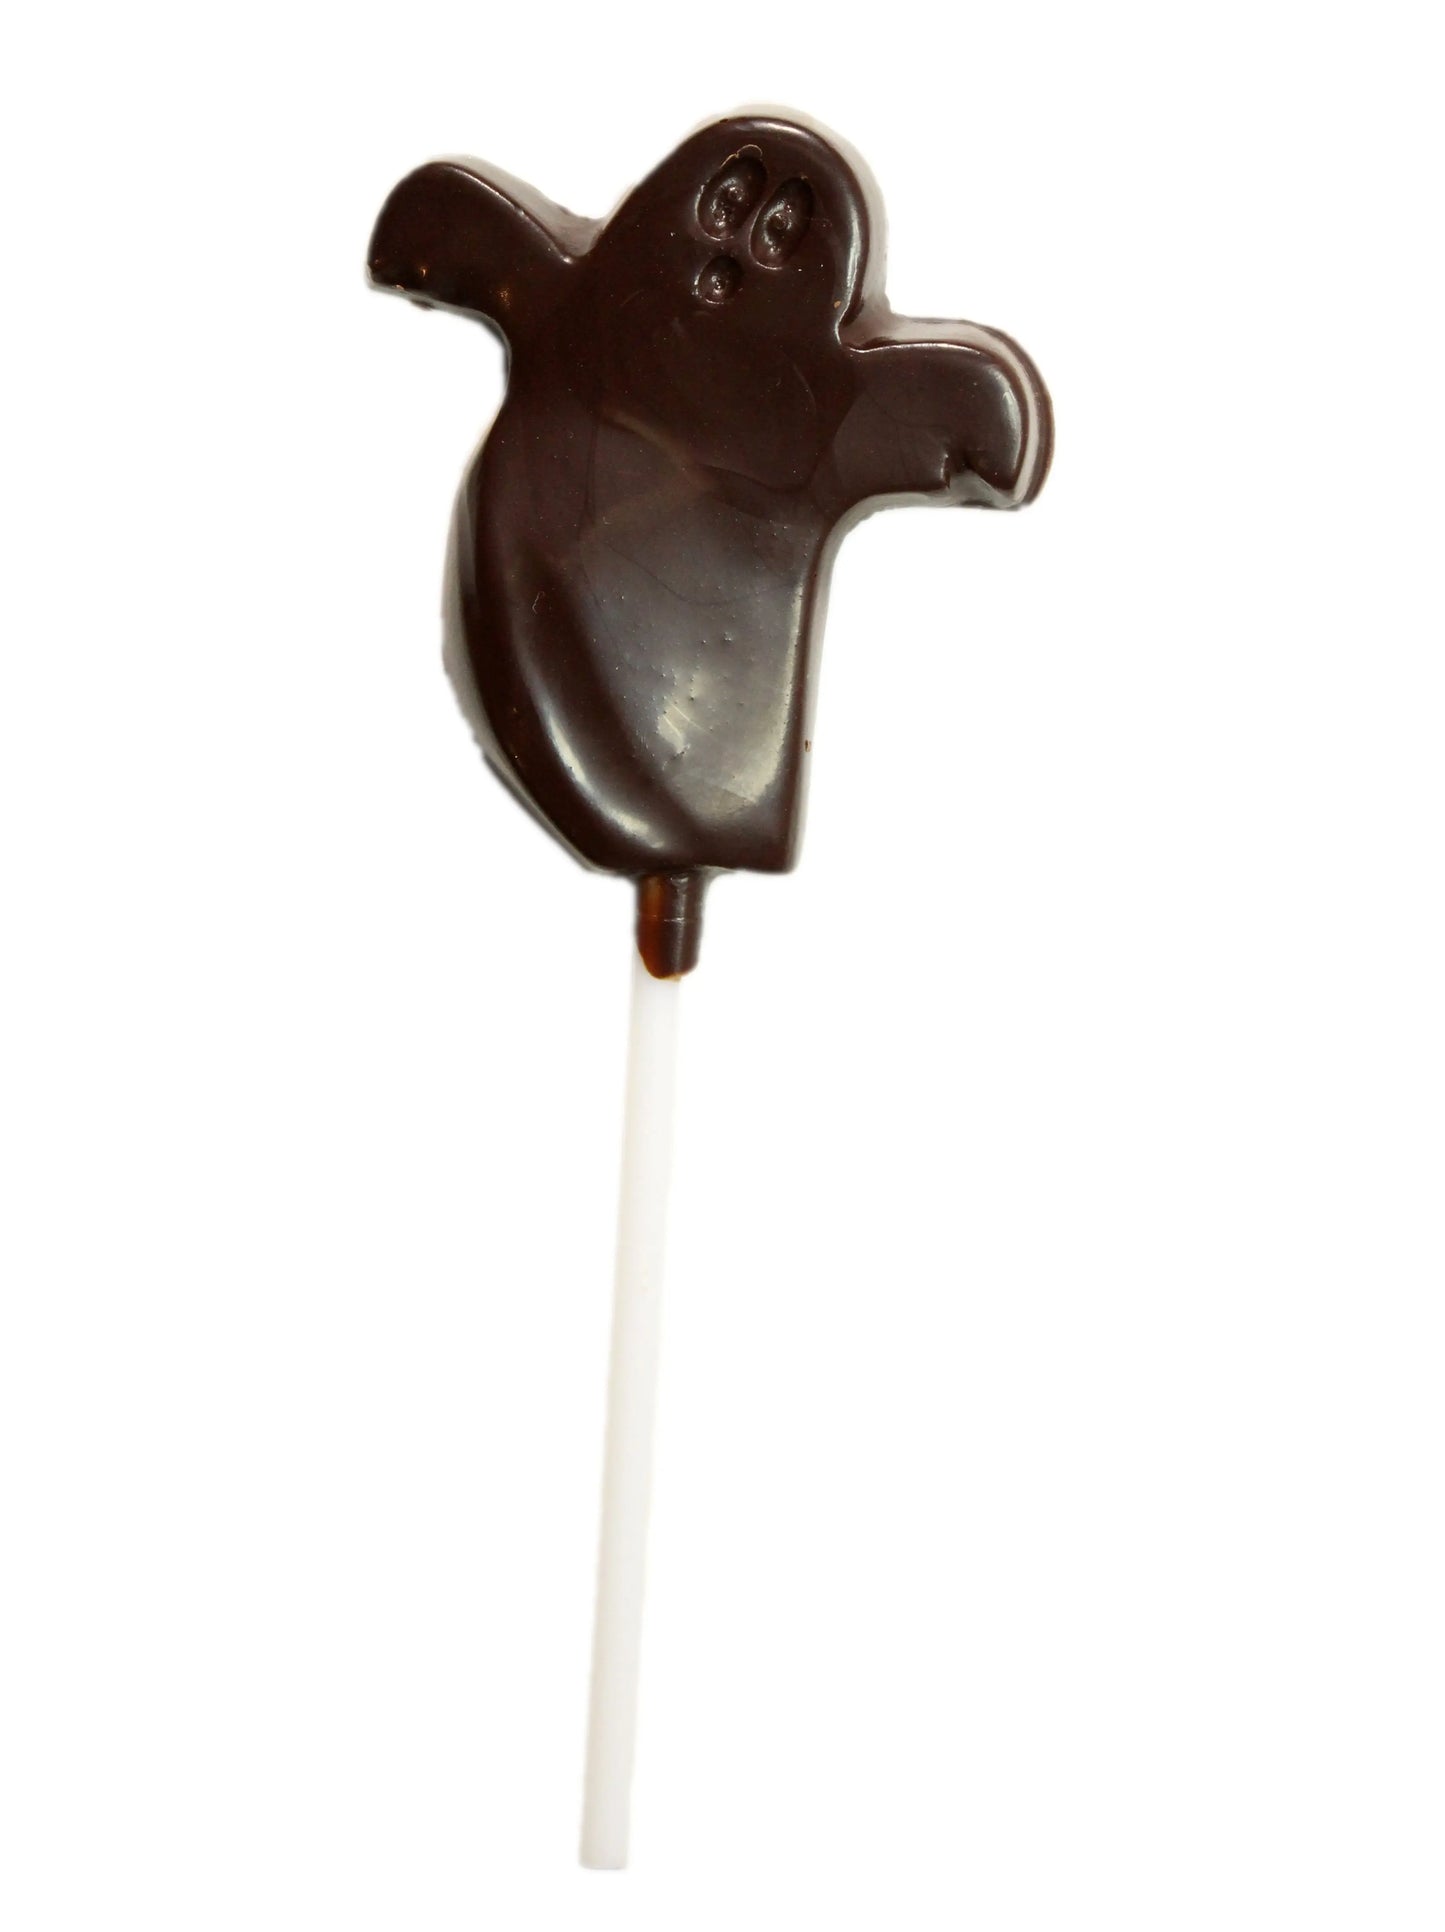 Halloween chocolate lollipop